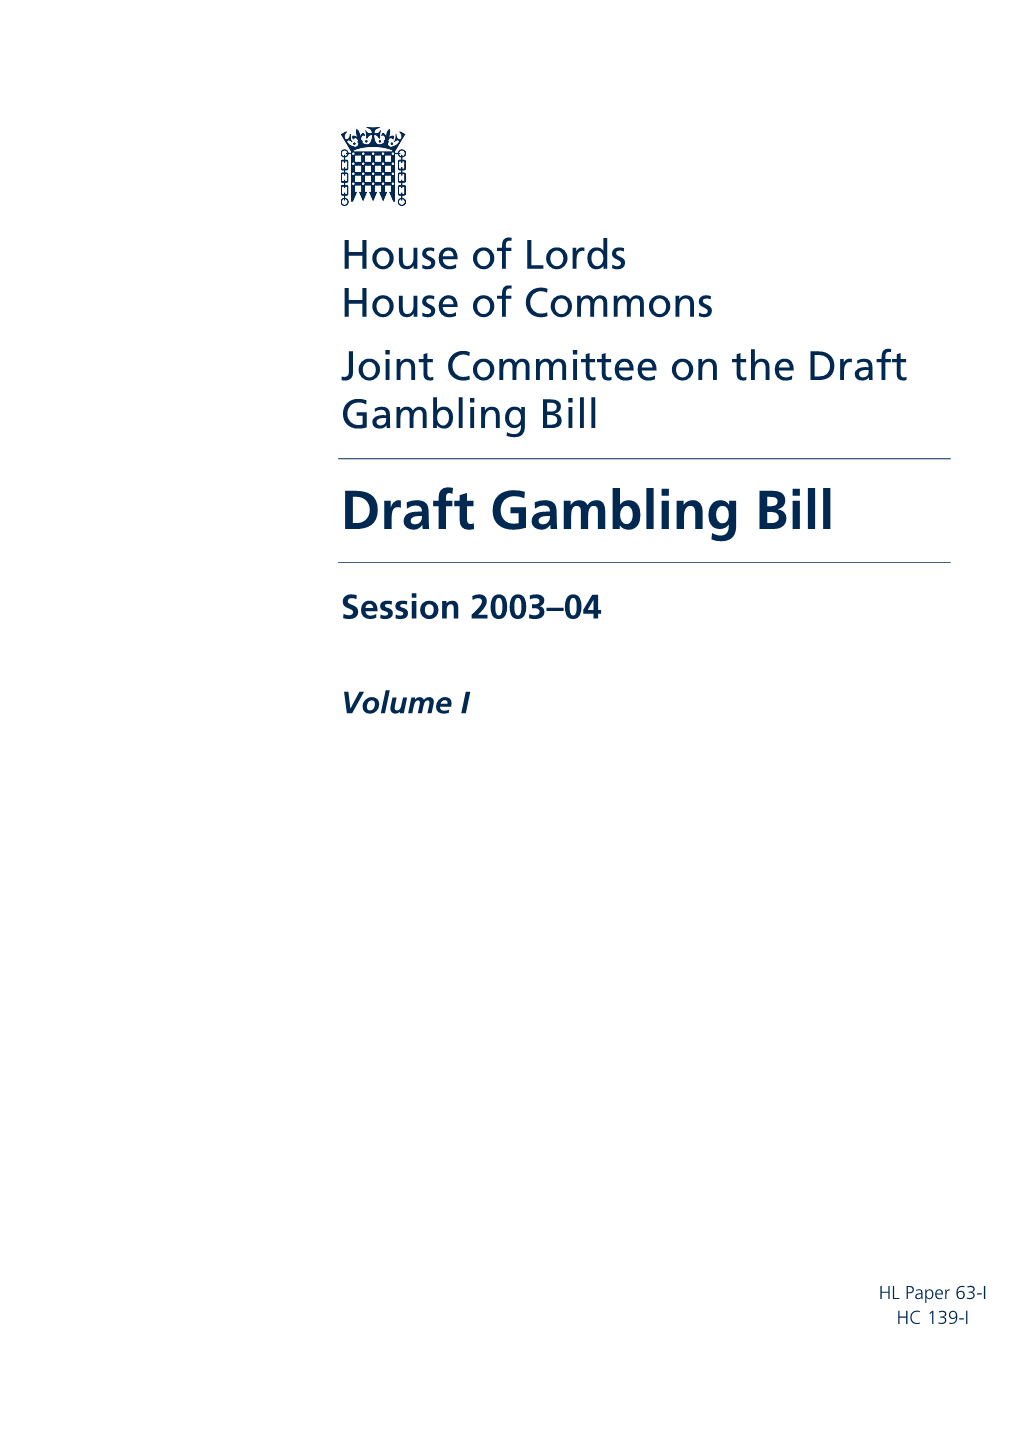 Joint Committee on the Draft Gambling Bill Draft Gambling Bill